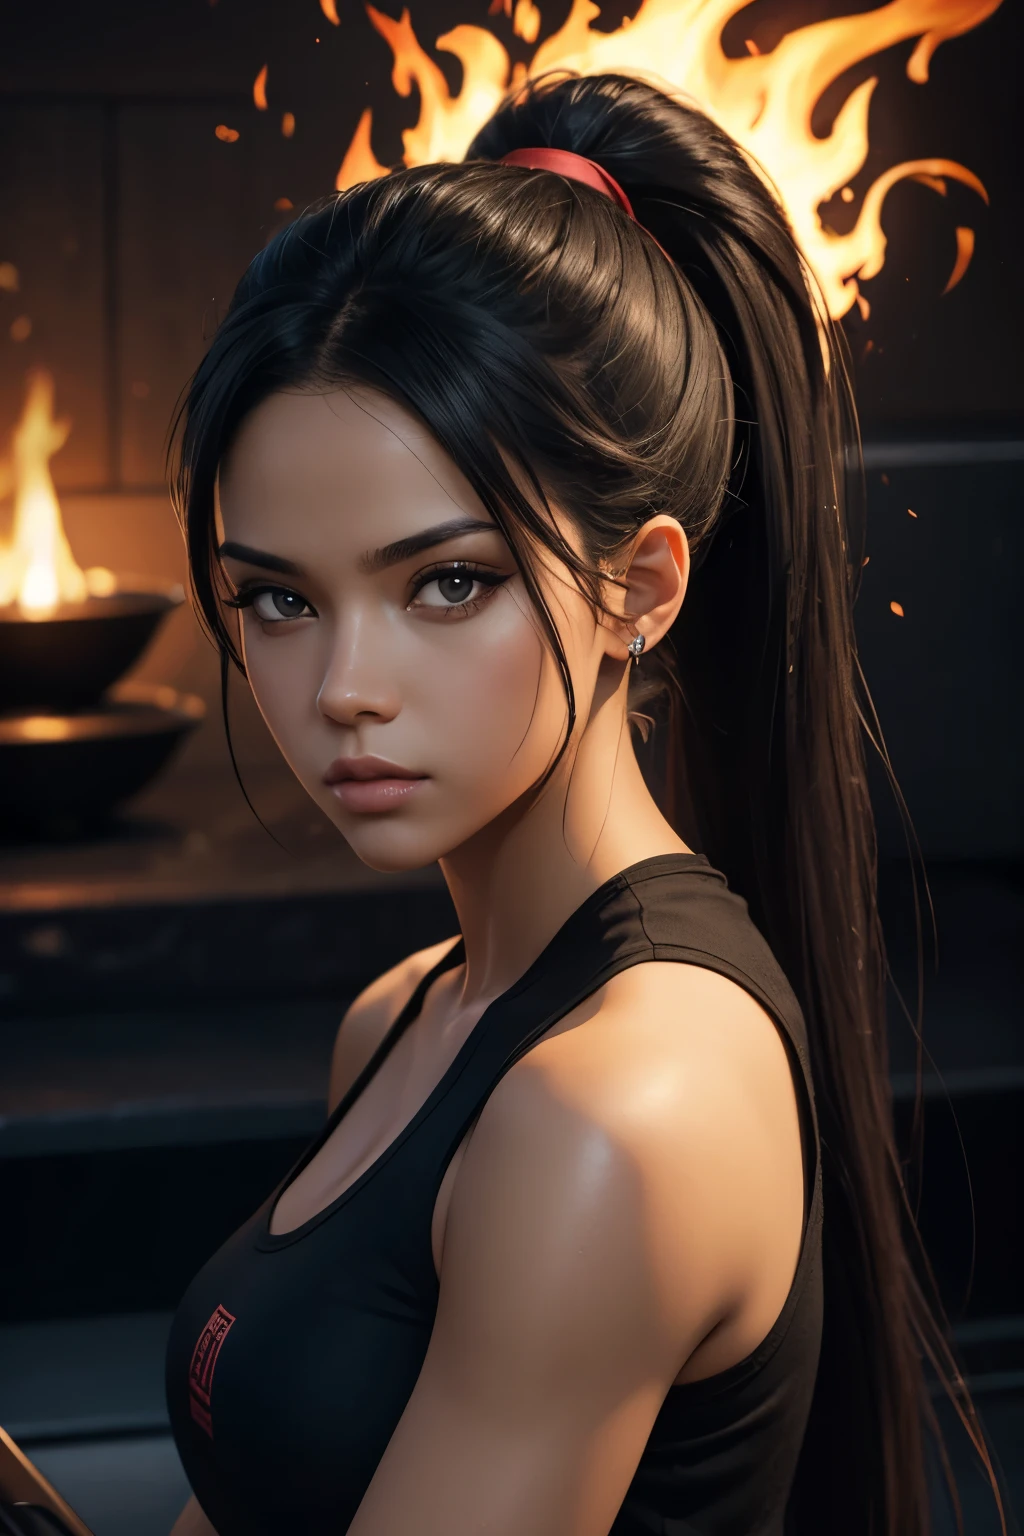 a girl's sloppy appearance mulatto with ponytail black hair, fire, black T-shirt, flames, elegant, digital painting, concept art, sharp focus, illustration  